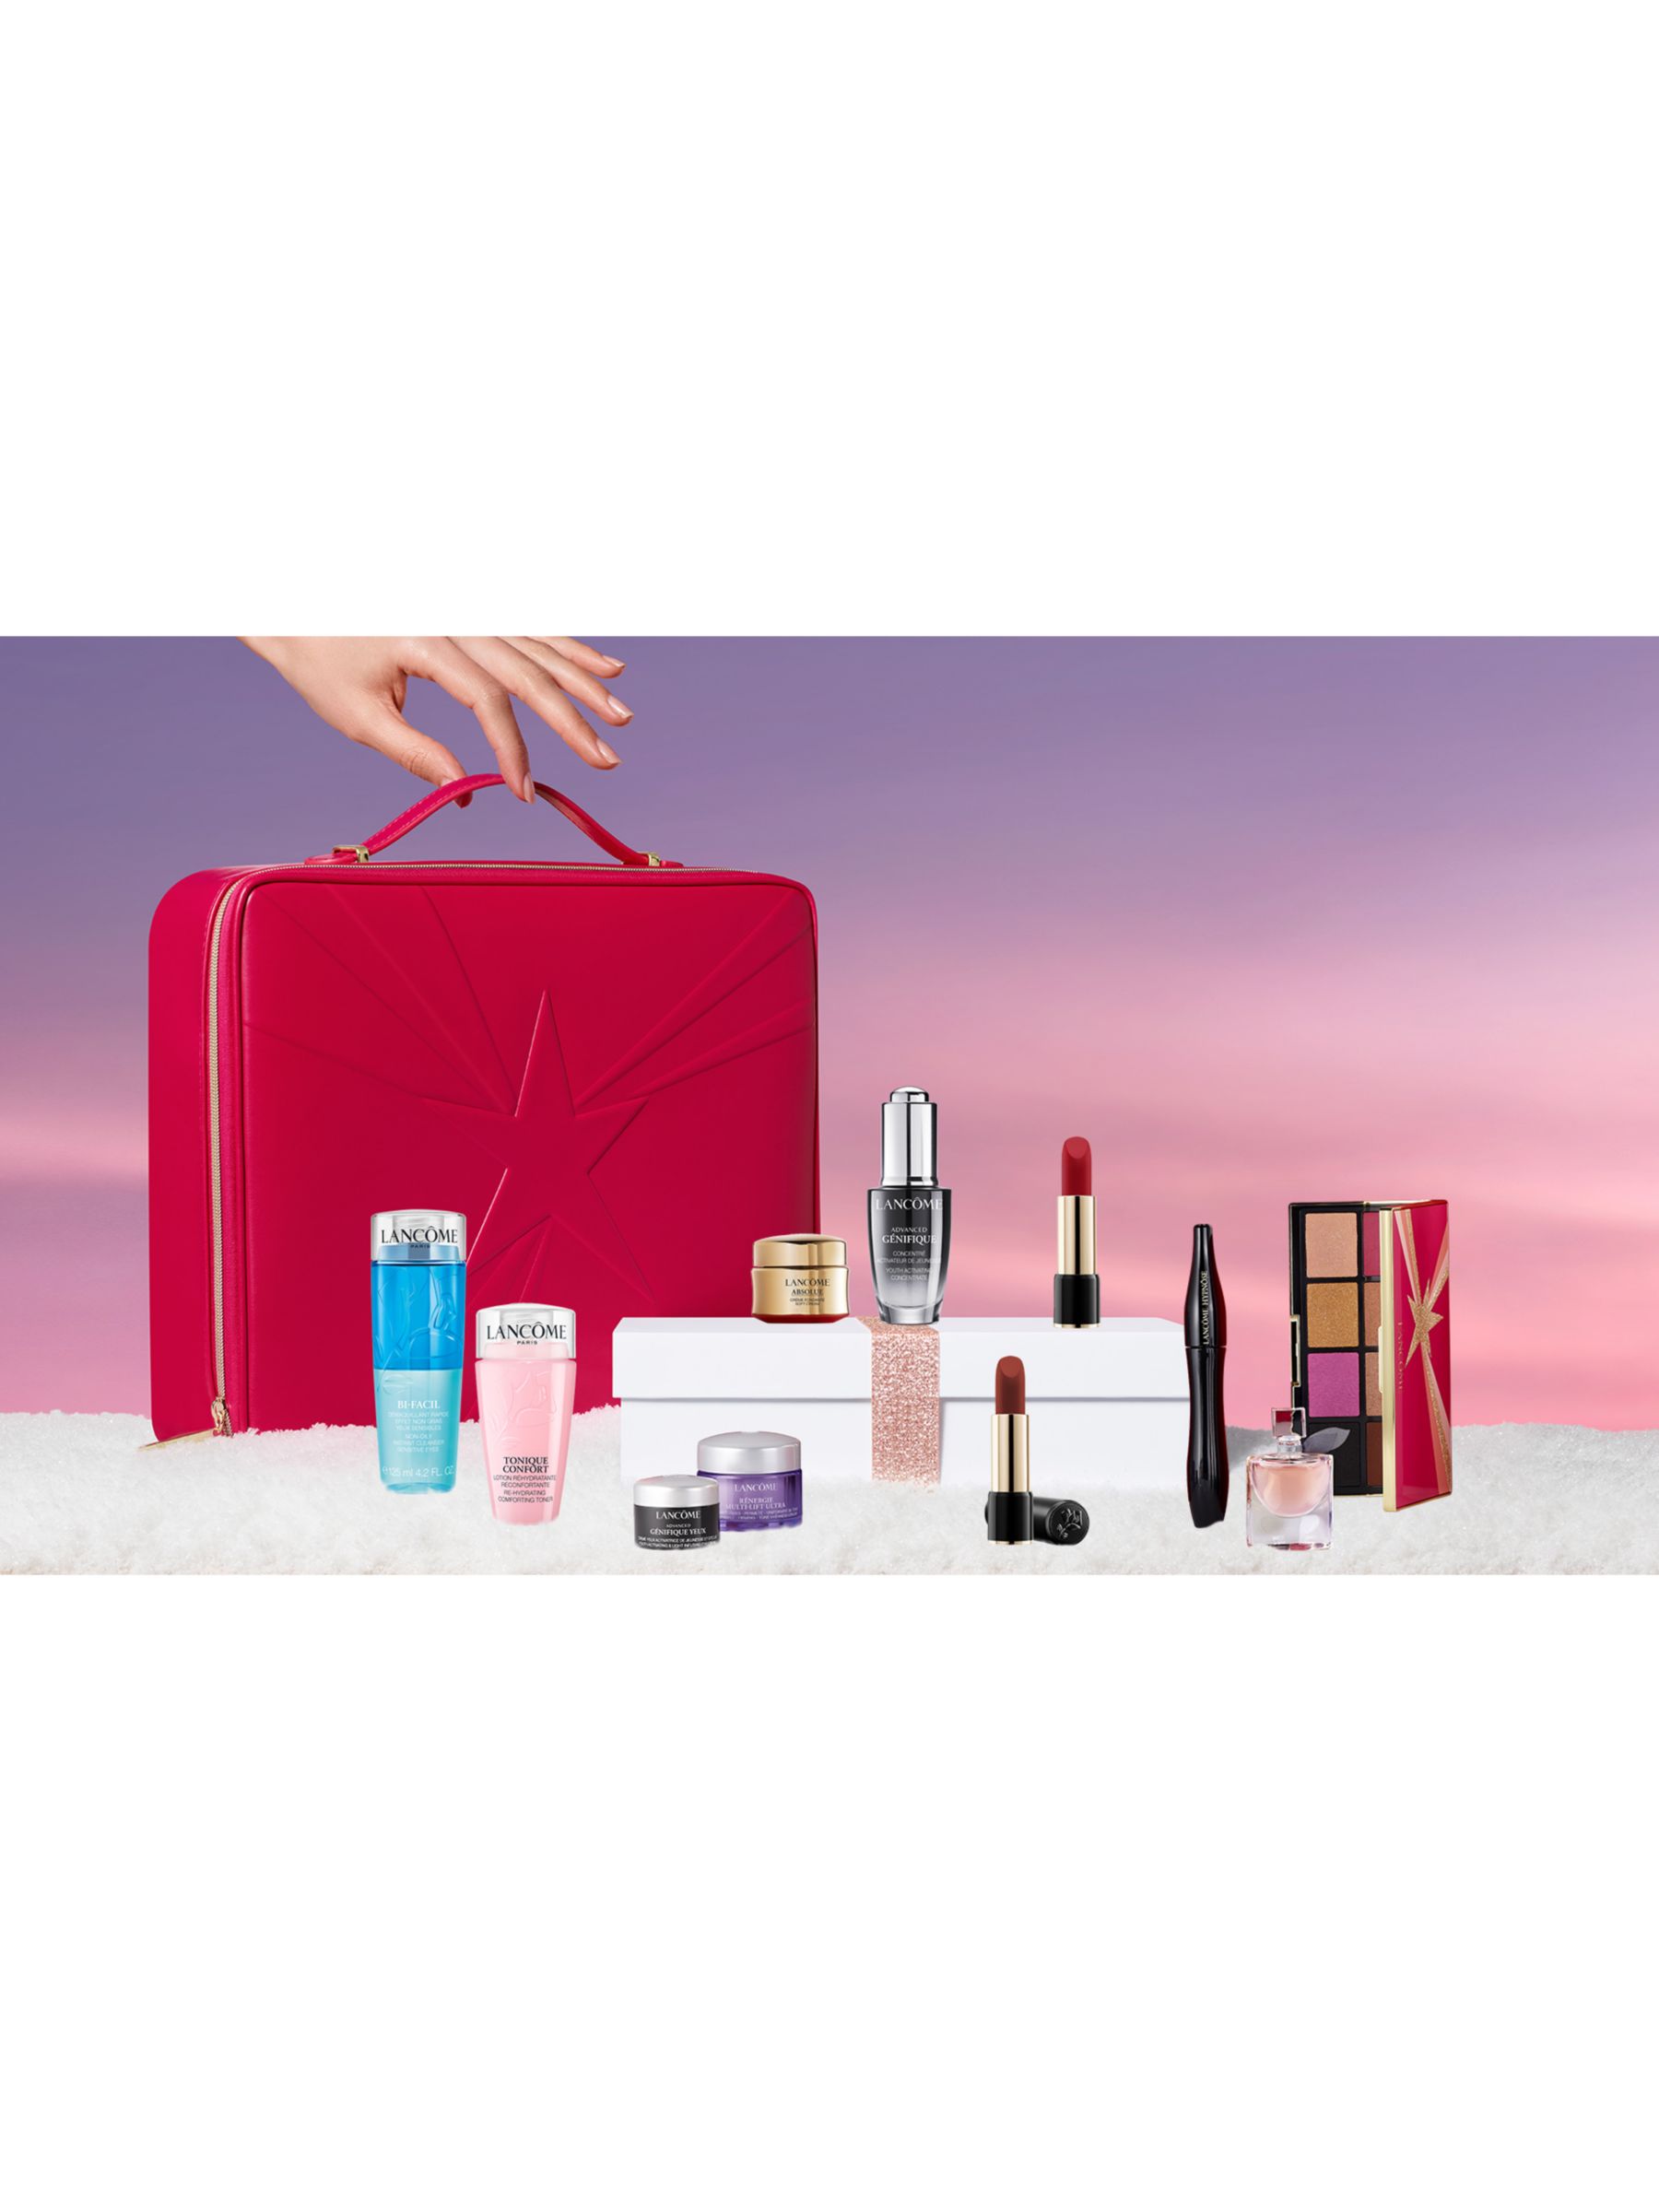 Lancôme Holiday Beauty Box Makeup Gift Set